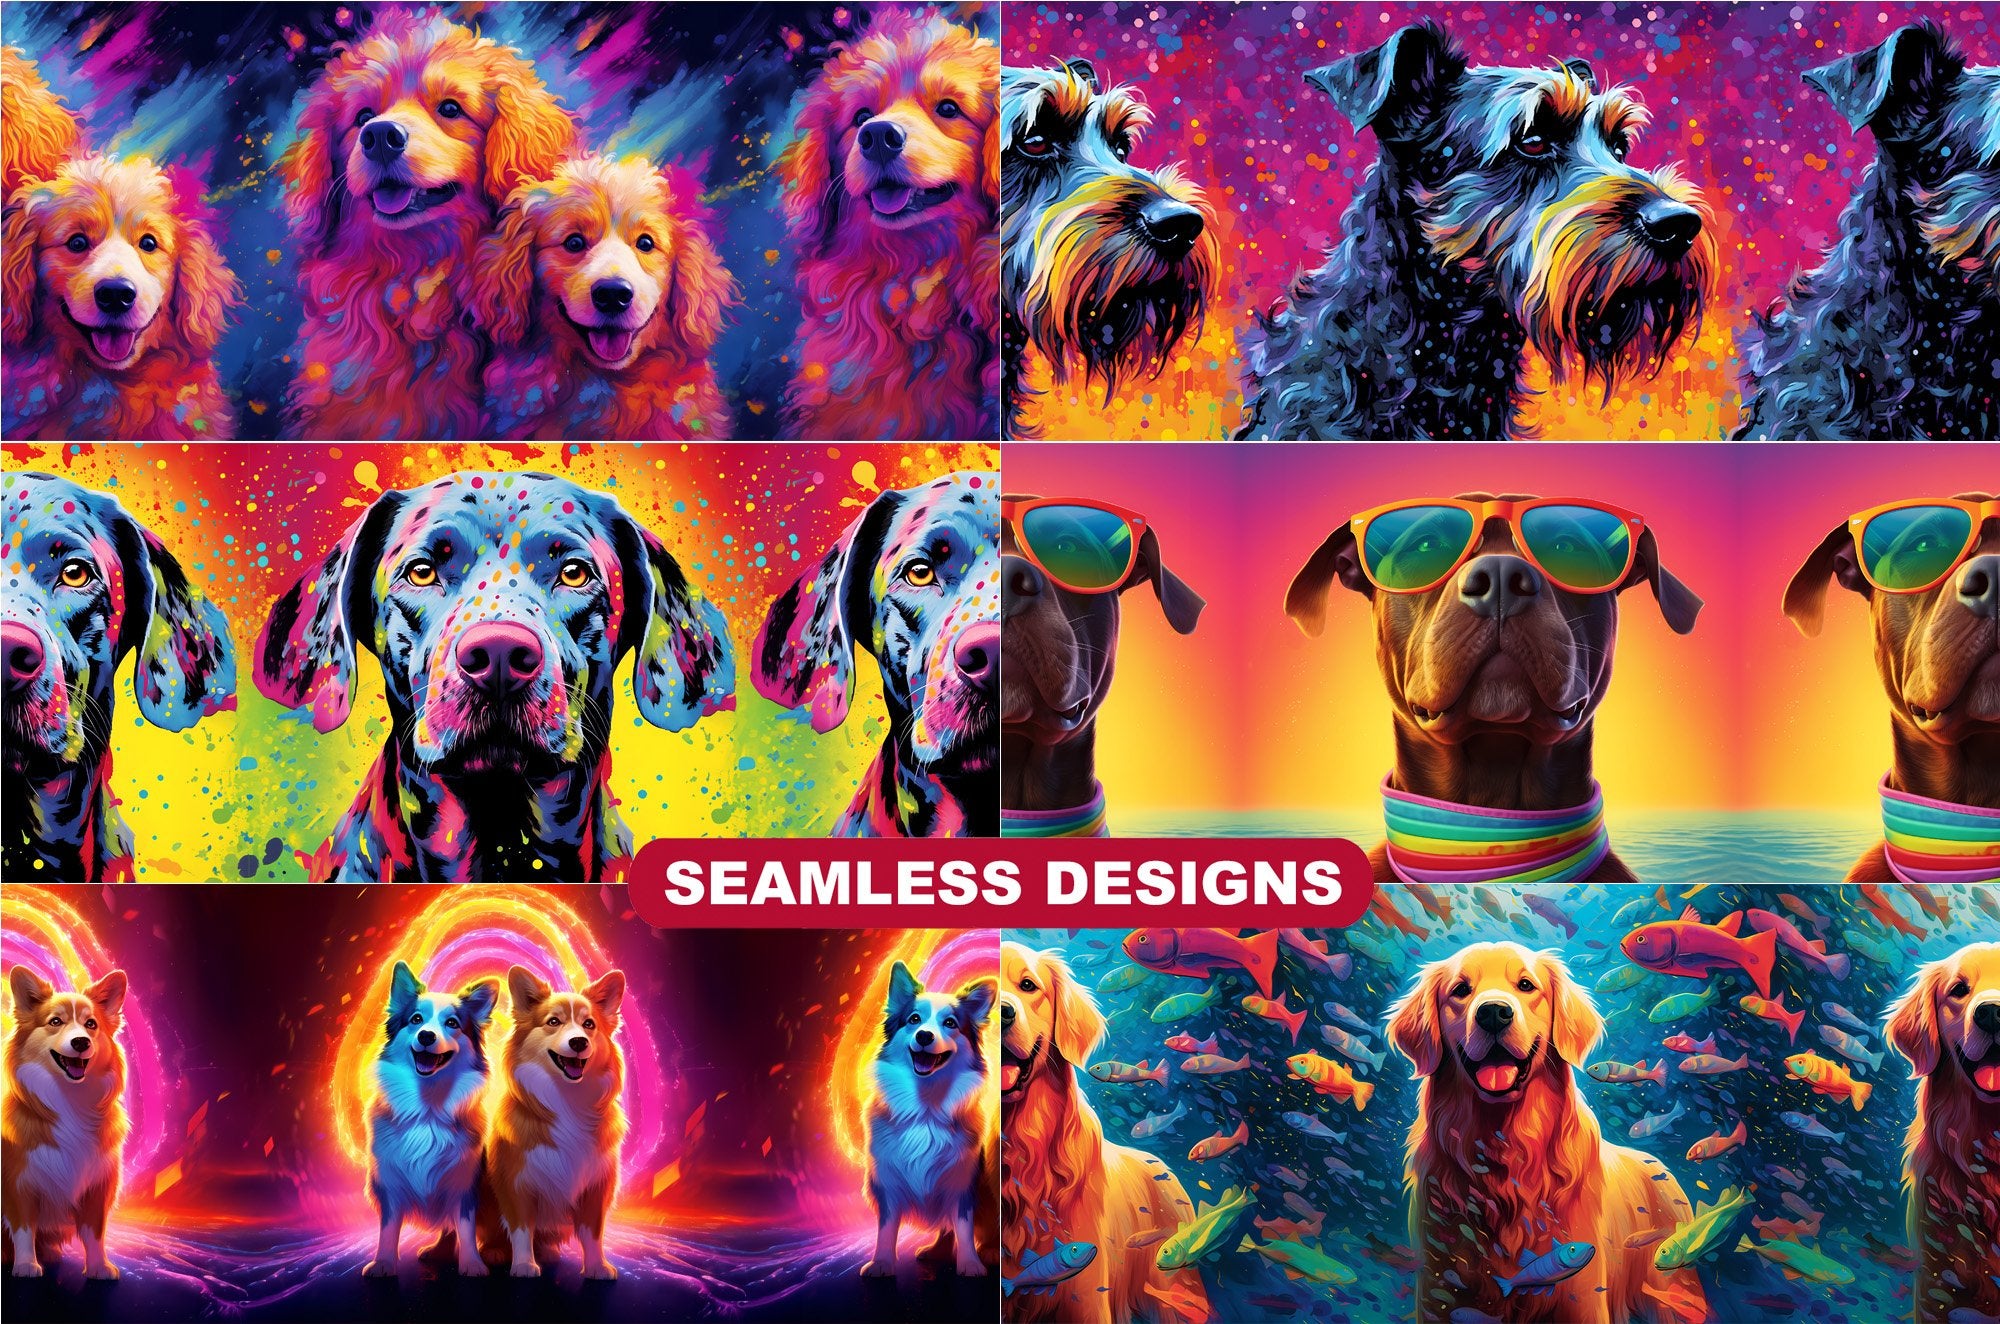 Rainbow Dogs Tumbler Wrap - CraftNest